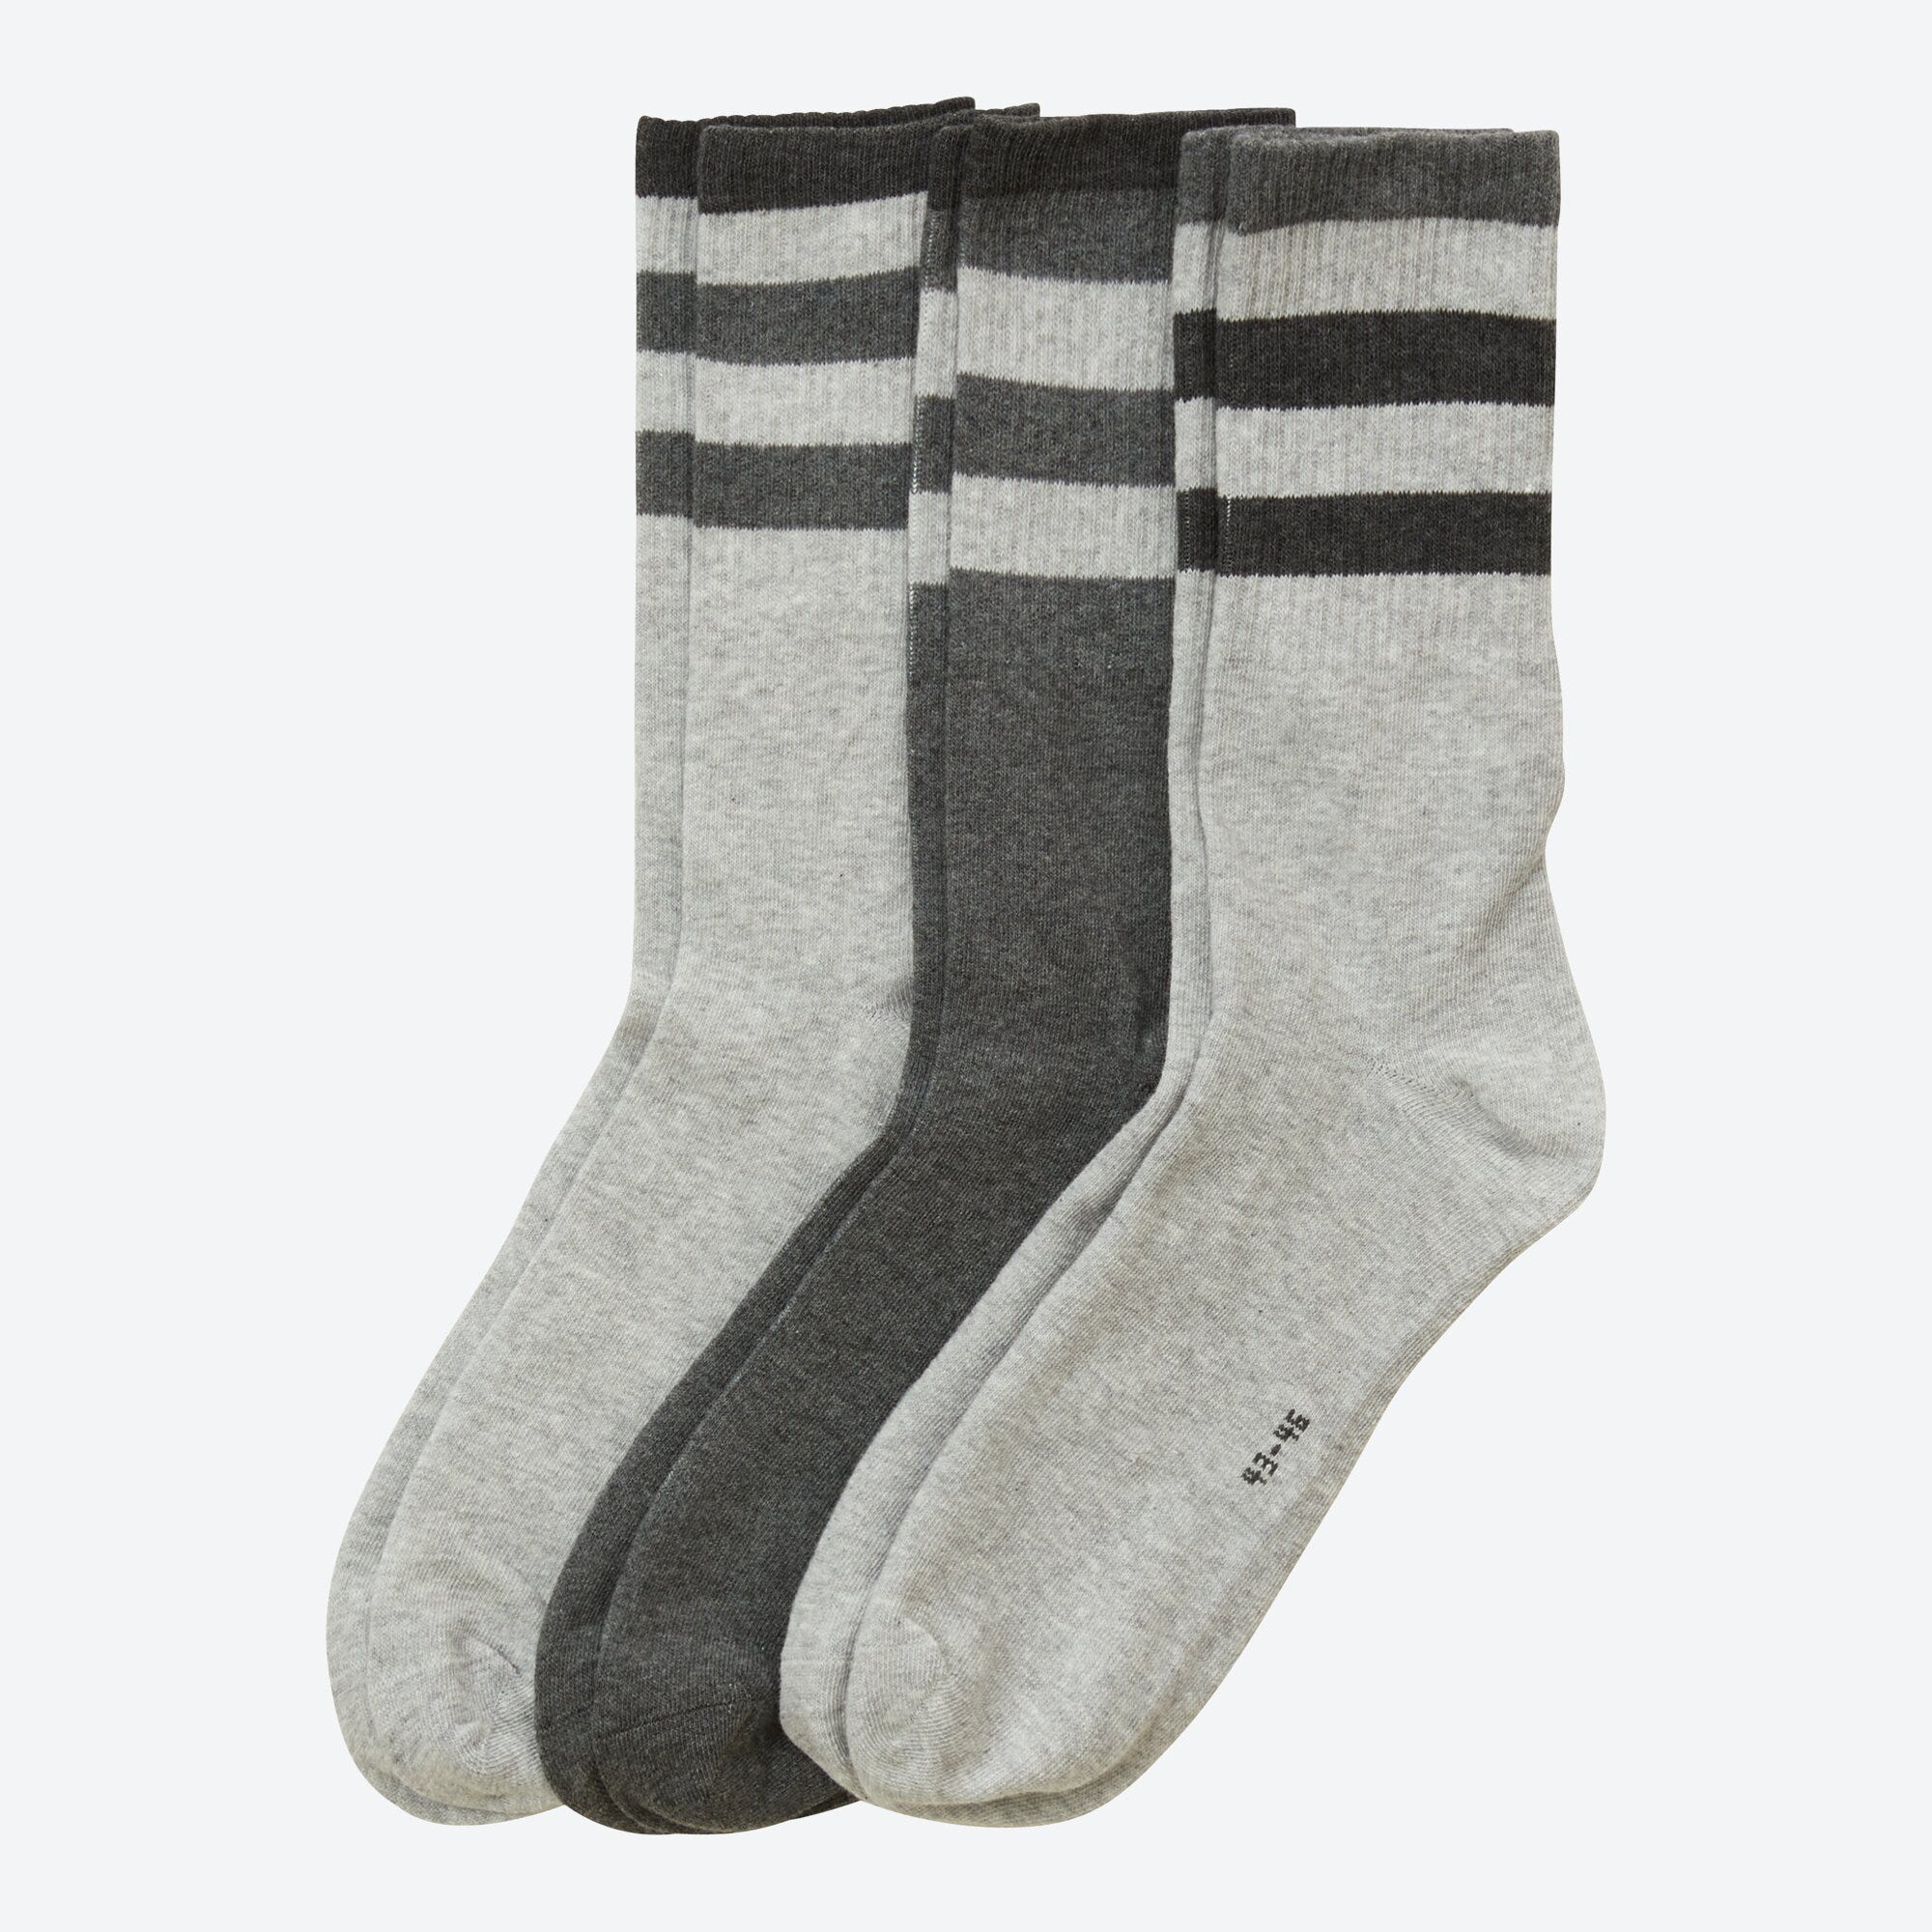 Herren-Socken mit tollem Muster, 3er-Pack